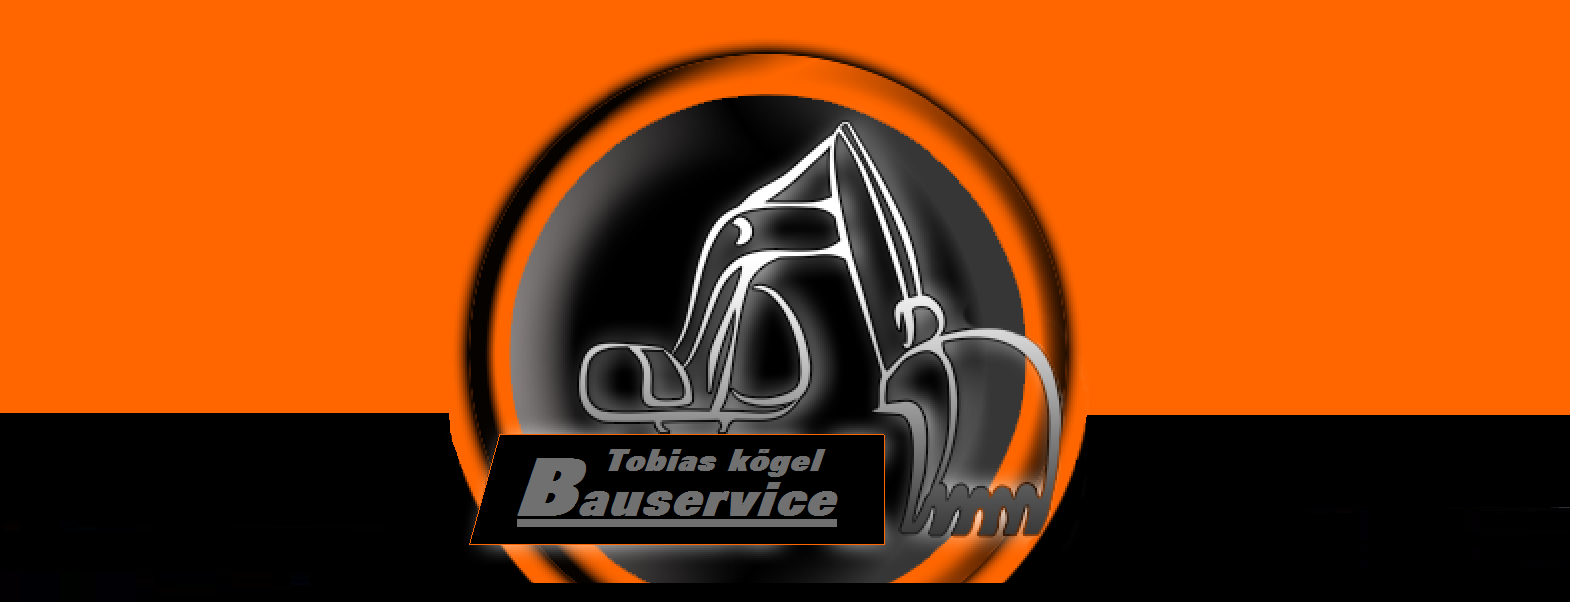 Logo Bauservice Tobias Kögel